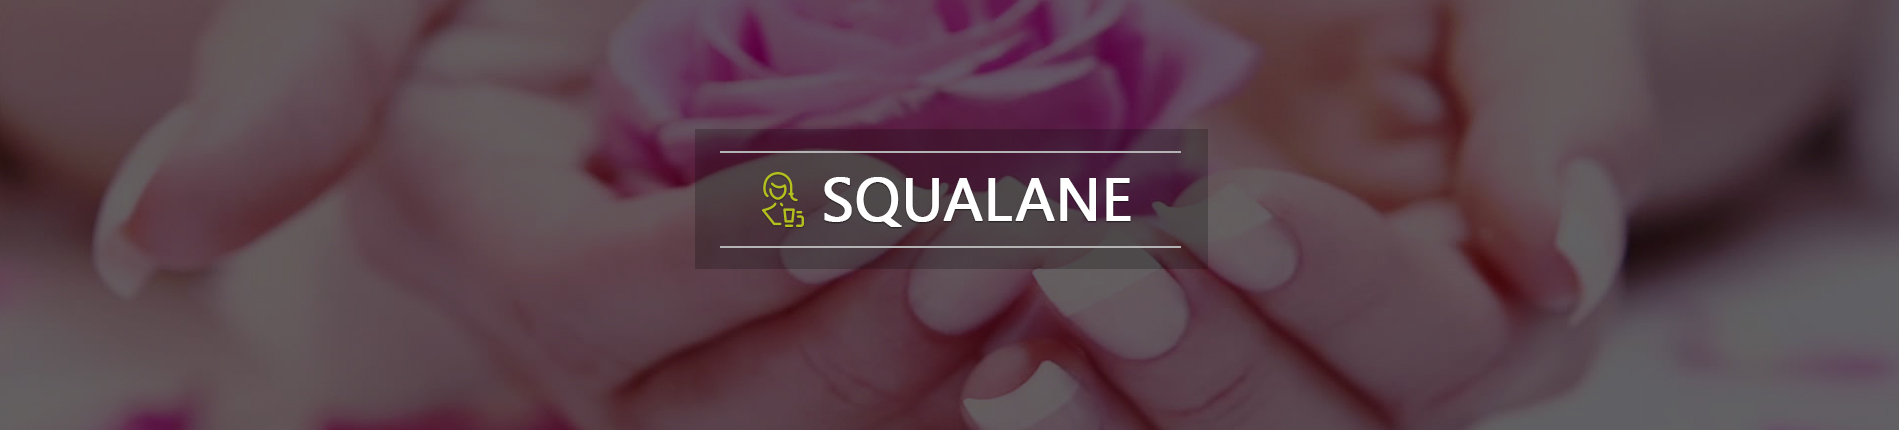 squalane-bg